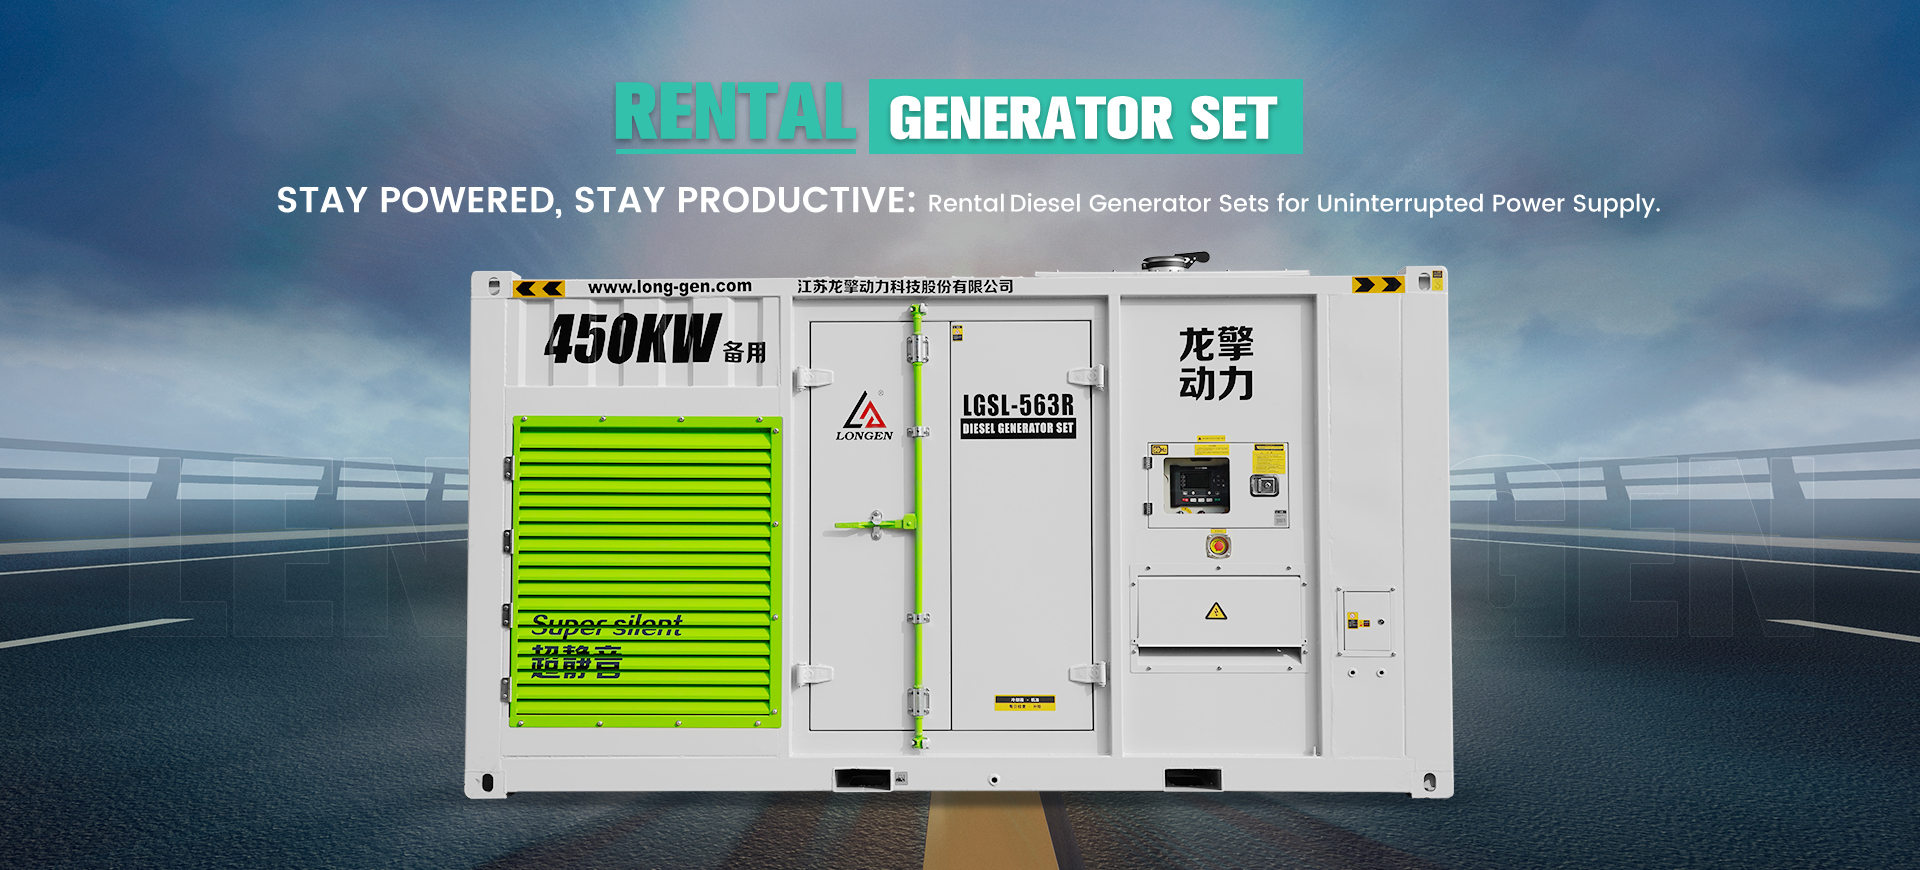 Rental generator sets